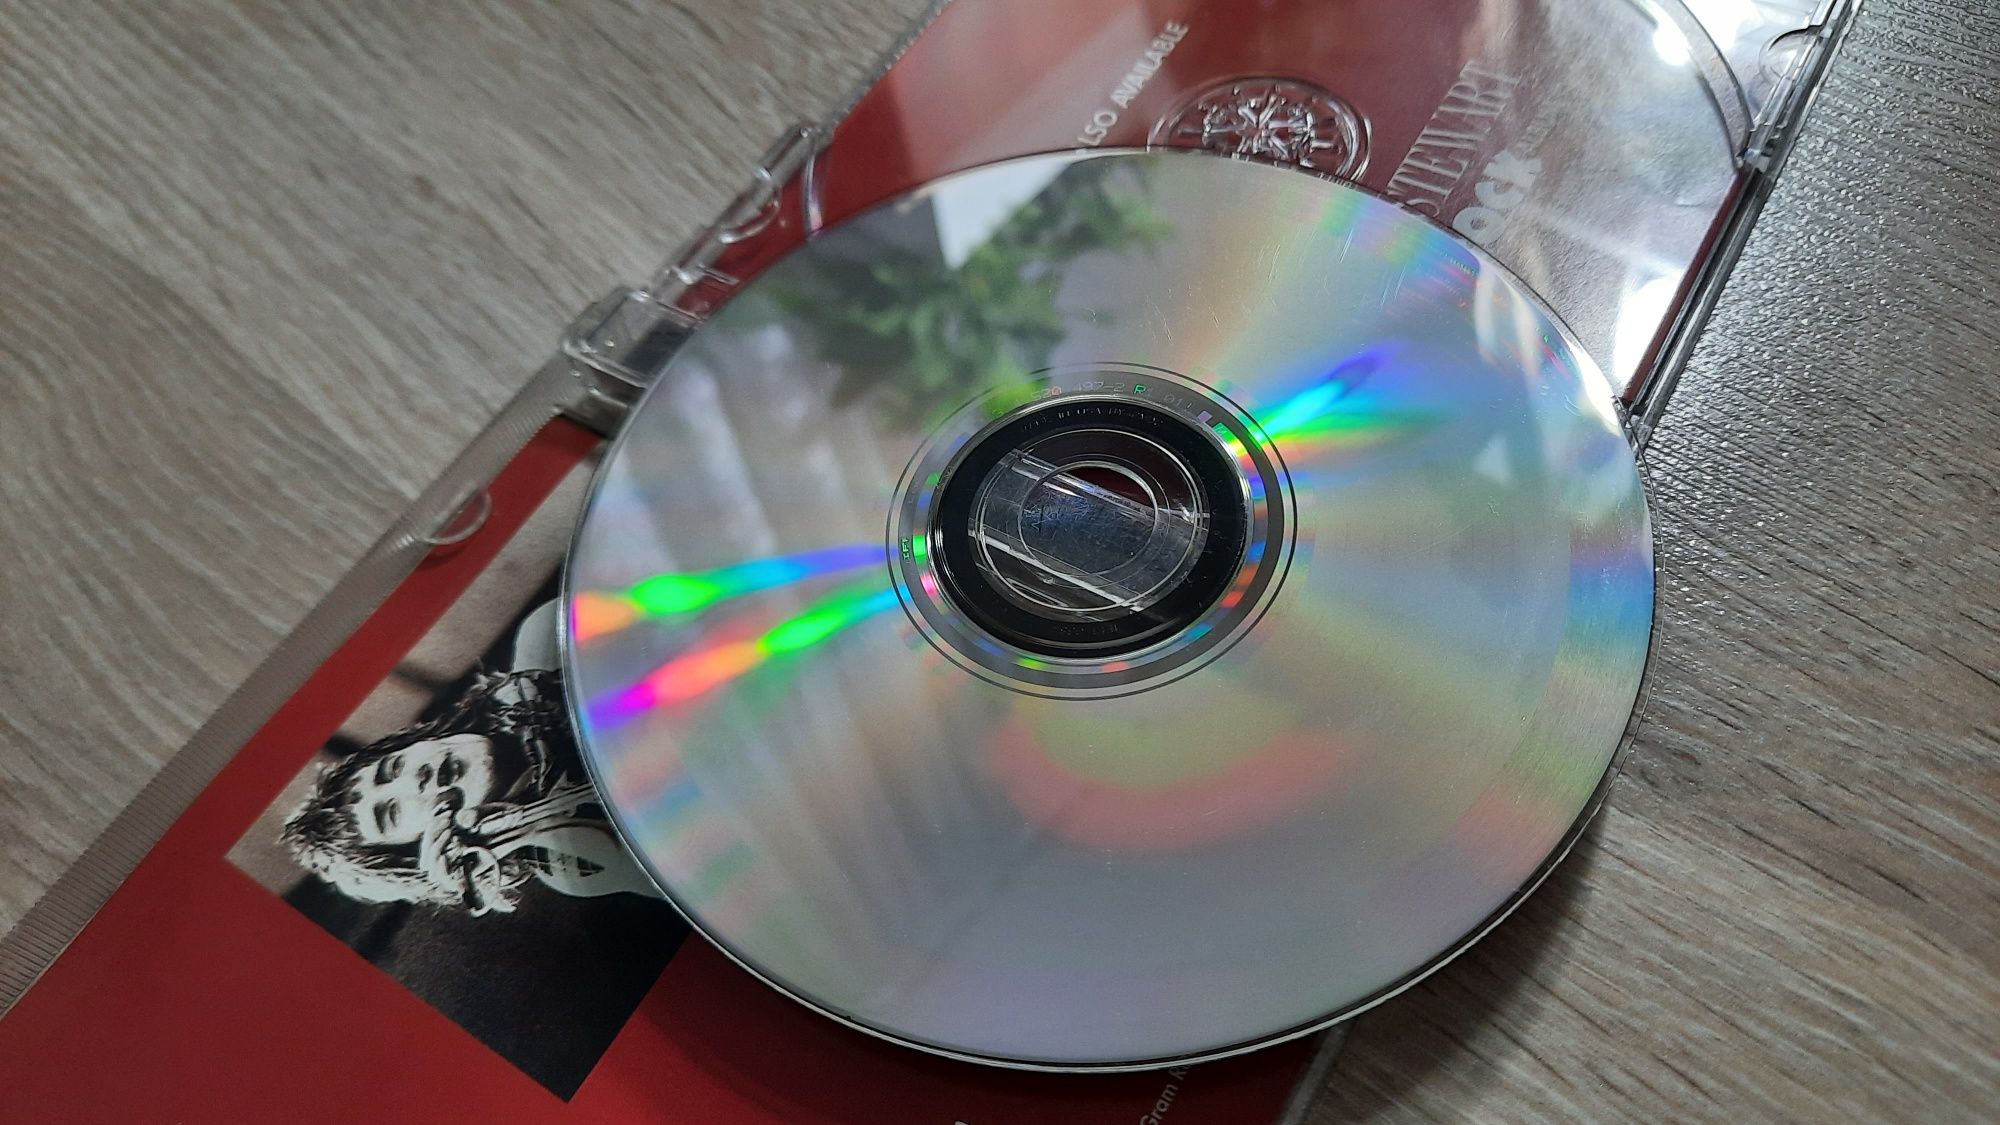 Płyta CD Rod Stewart